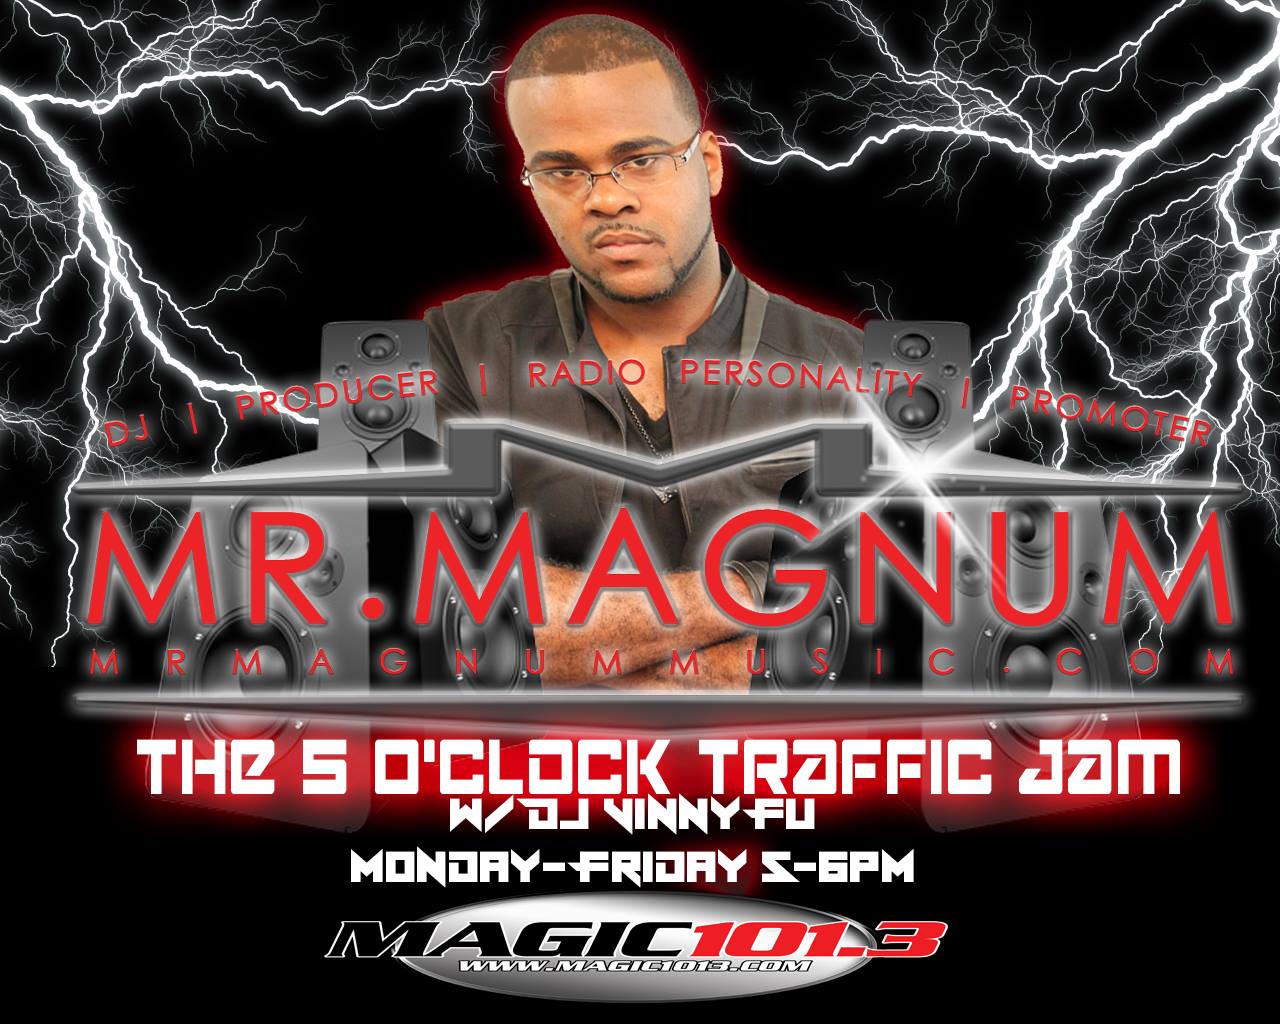 The 5 O’Clock Traffic Jam 10/28/16  on Magic 101.3